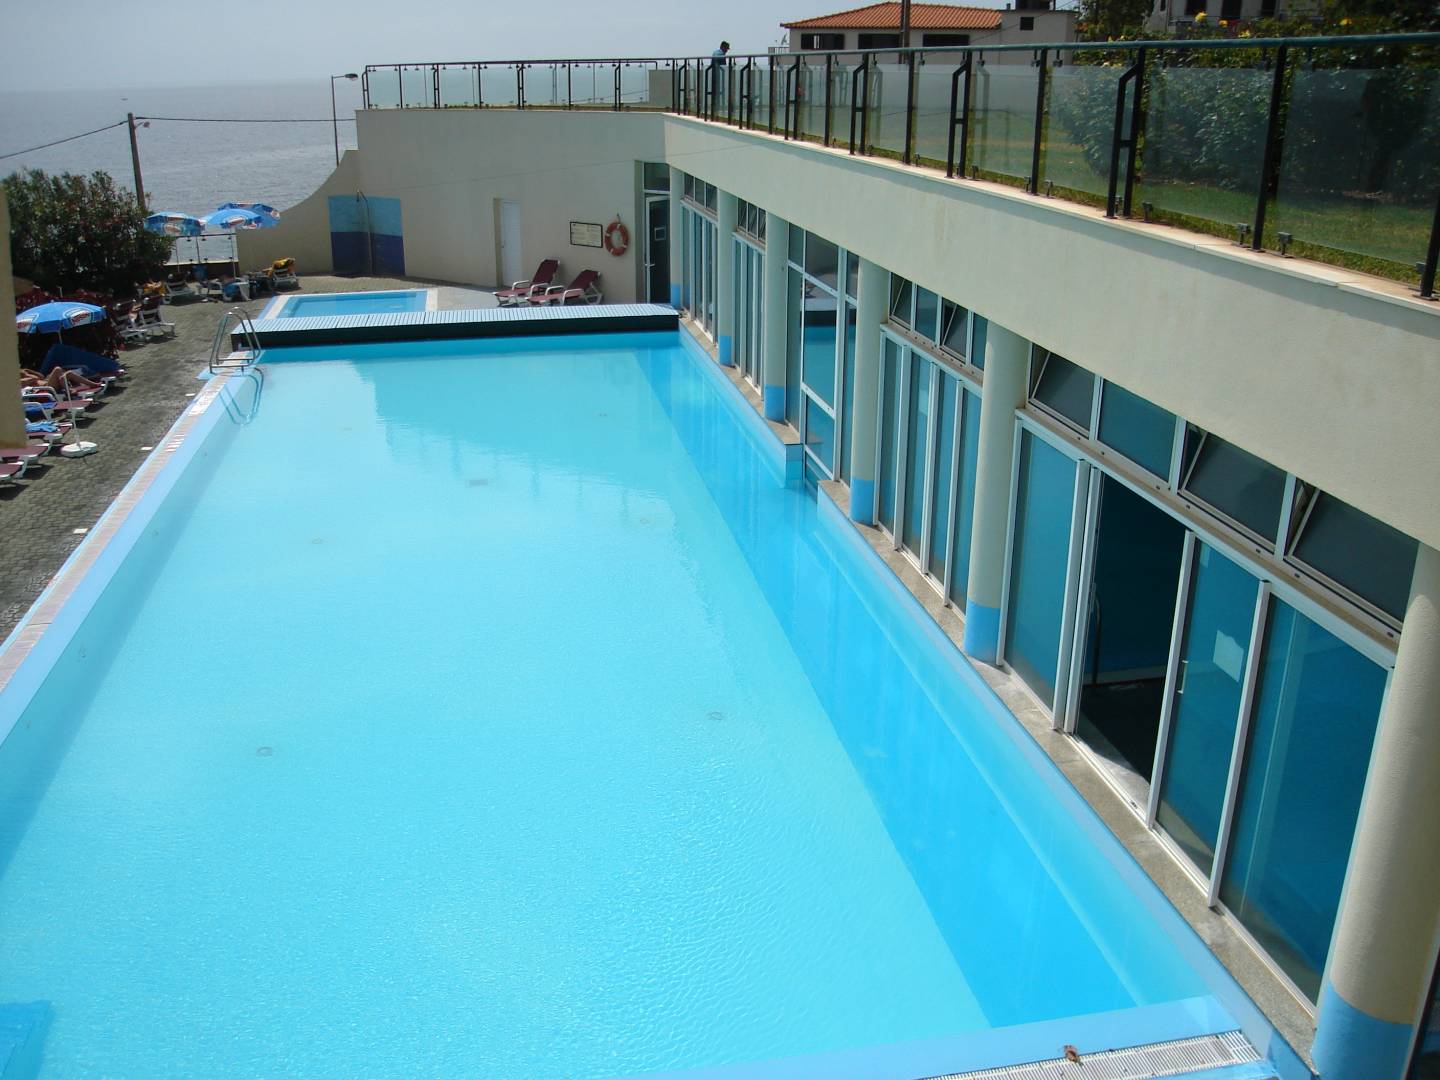 Paúl do Mar Sea View Hotel